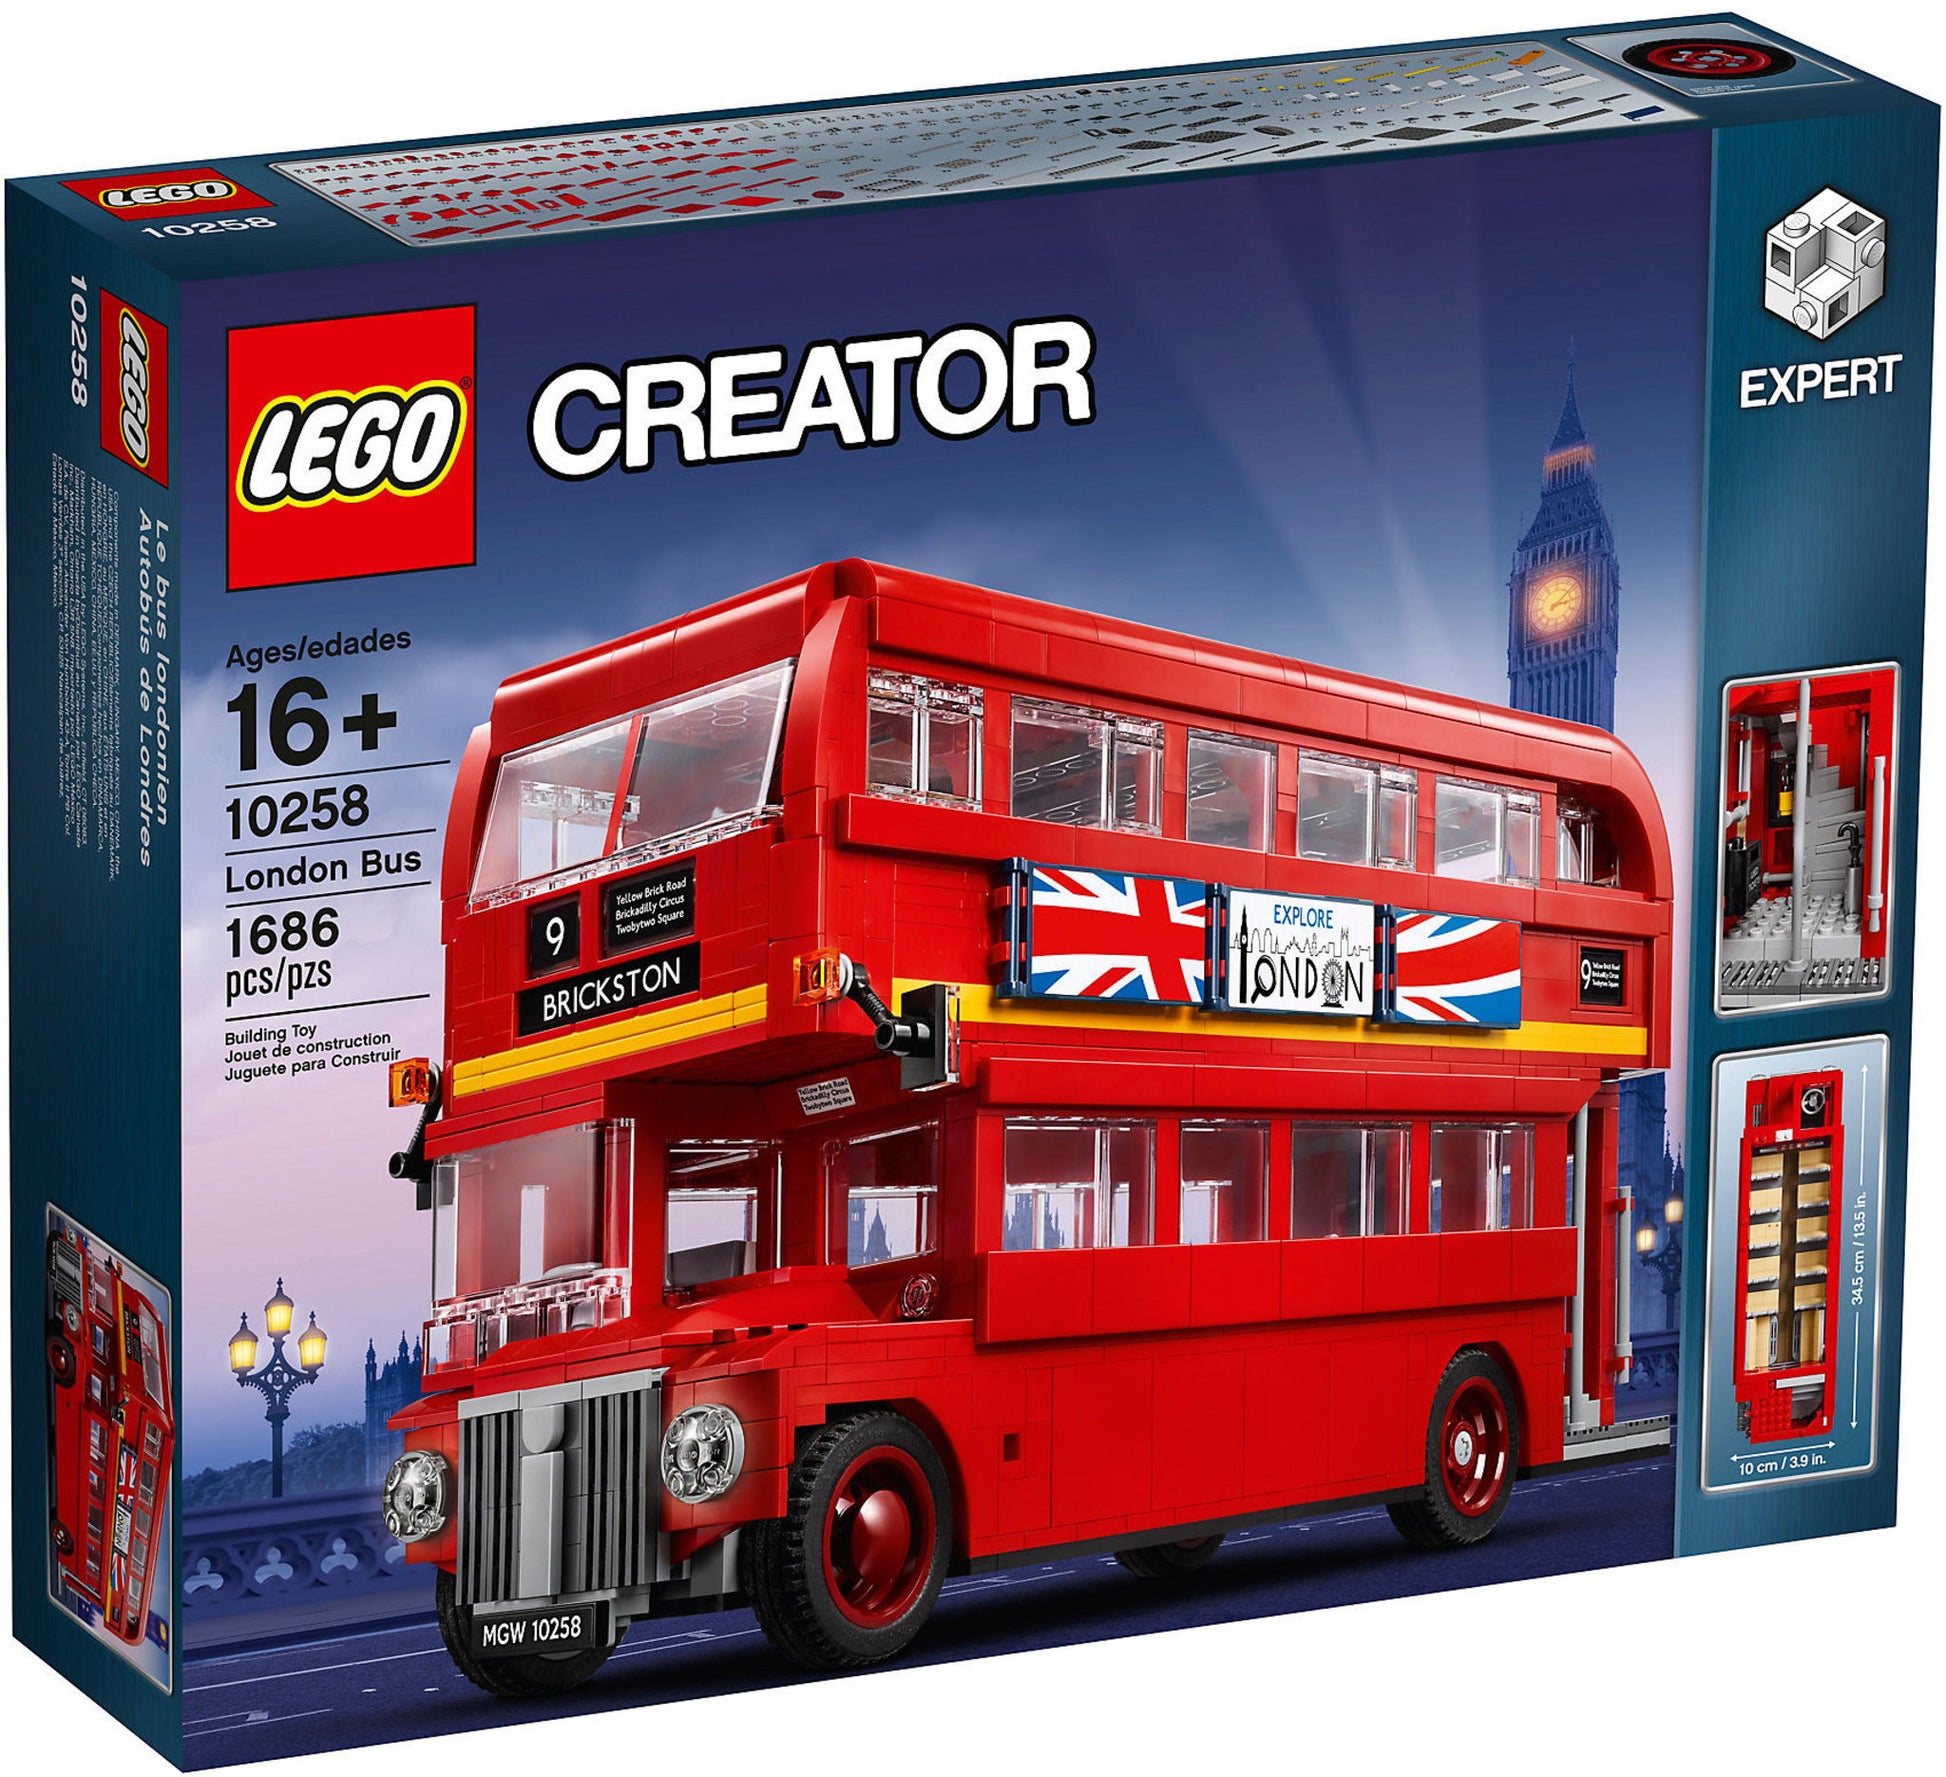 10258 LEGO Creator - London Bus – sgorbatipiacenza